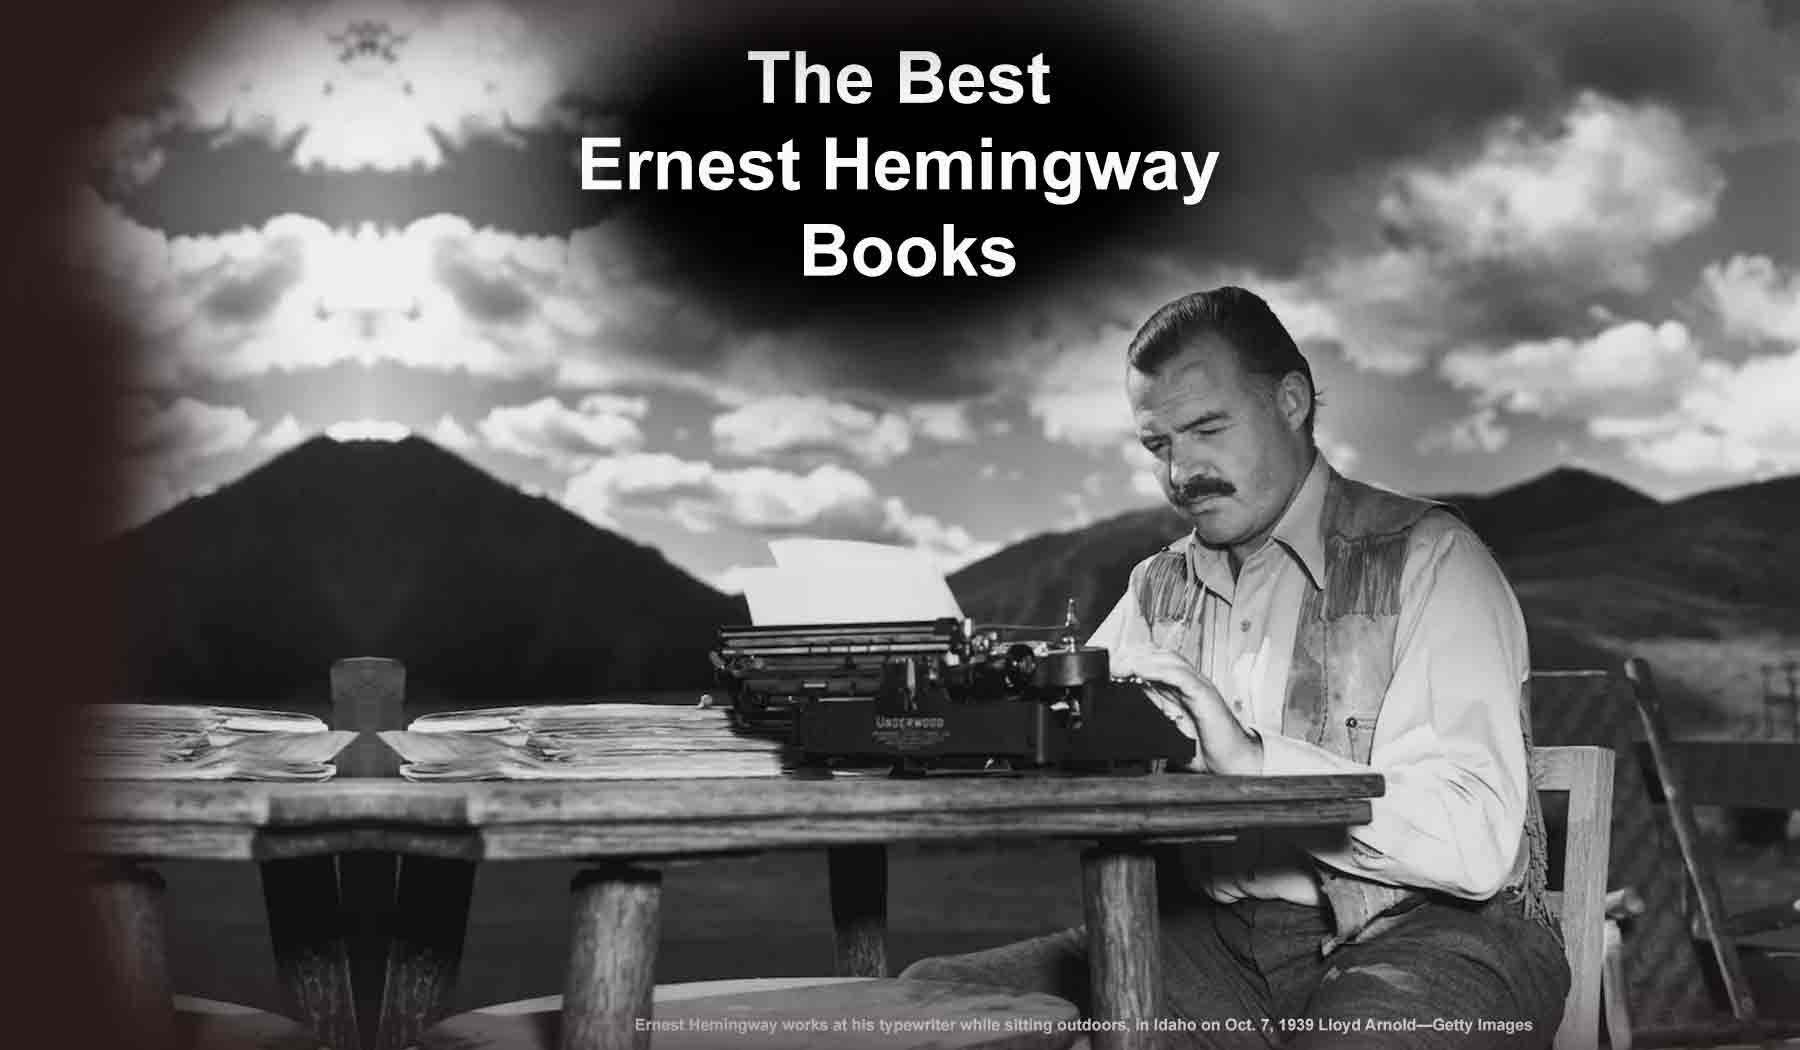 The Best Ernest Hemingway Books